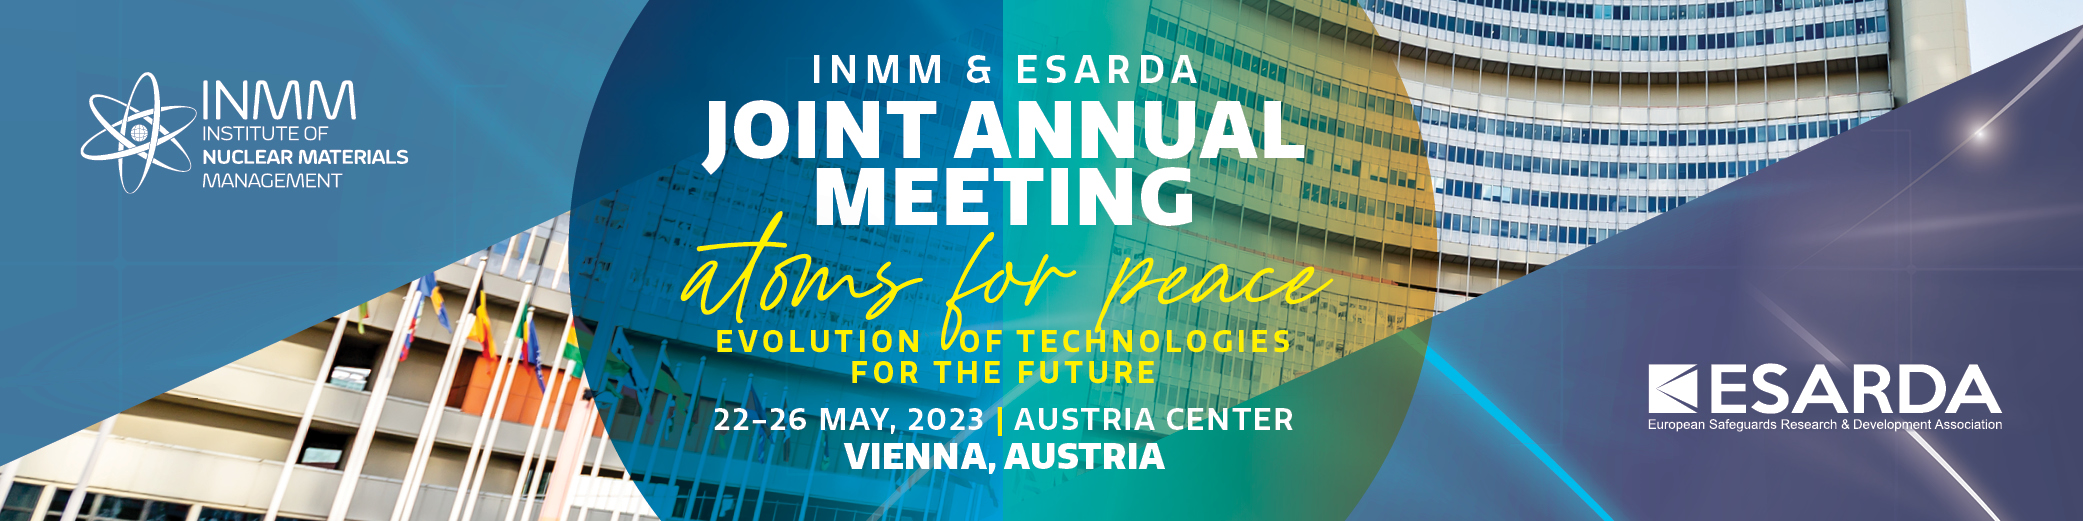 2023 INMM-ESARDA Joint Annual Meeting Banner